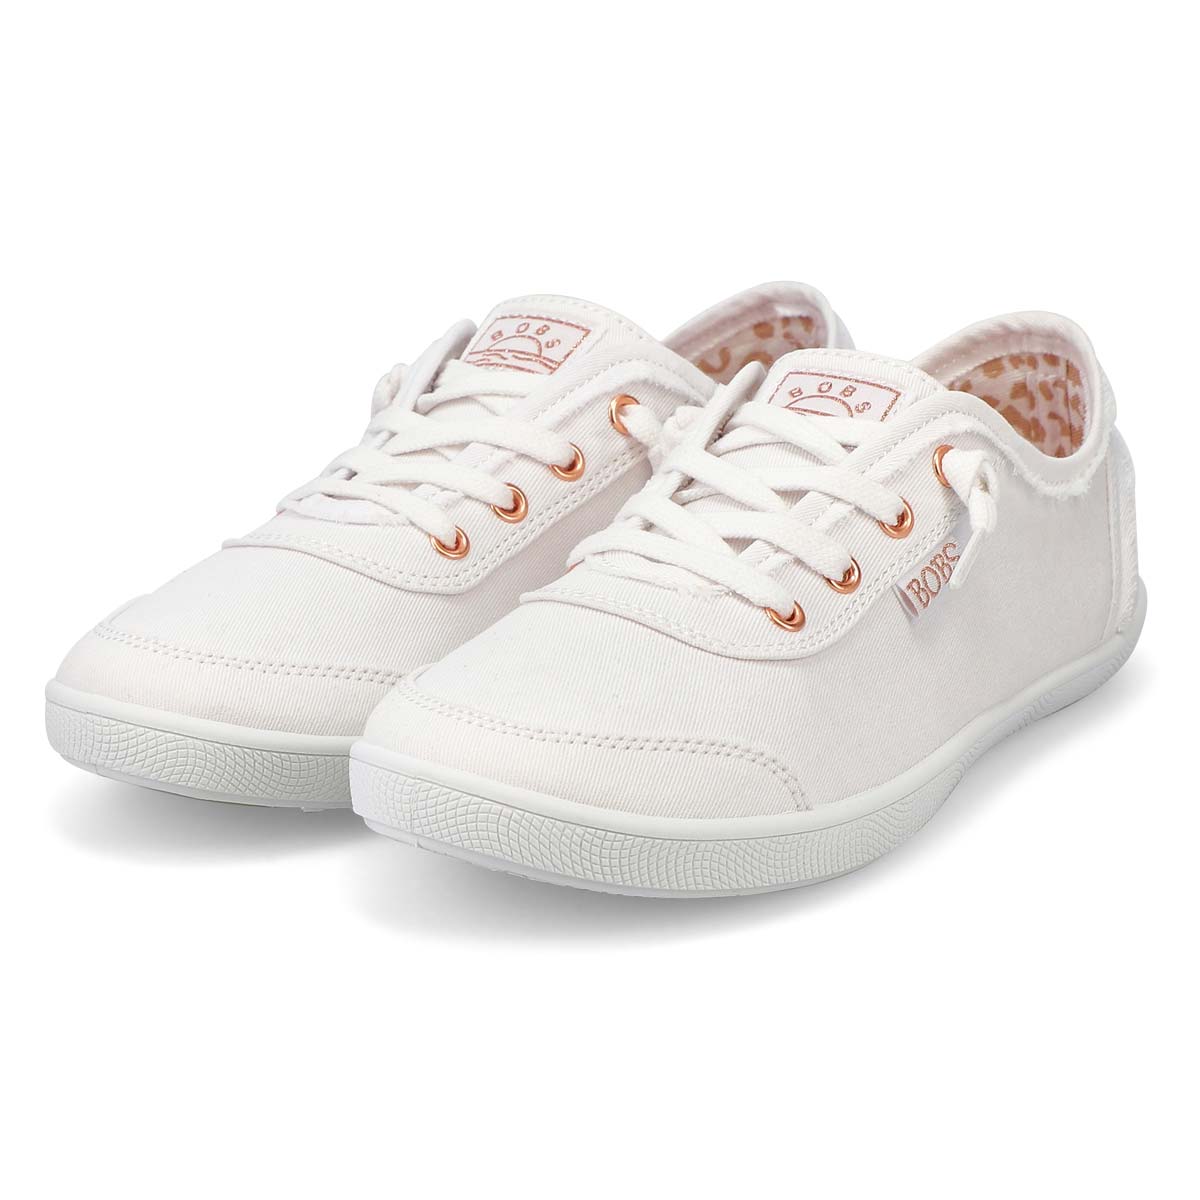 Womens' Bobs B Cute sneakers - white